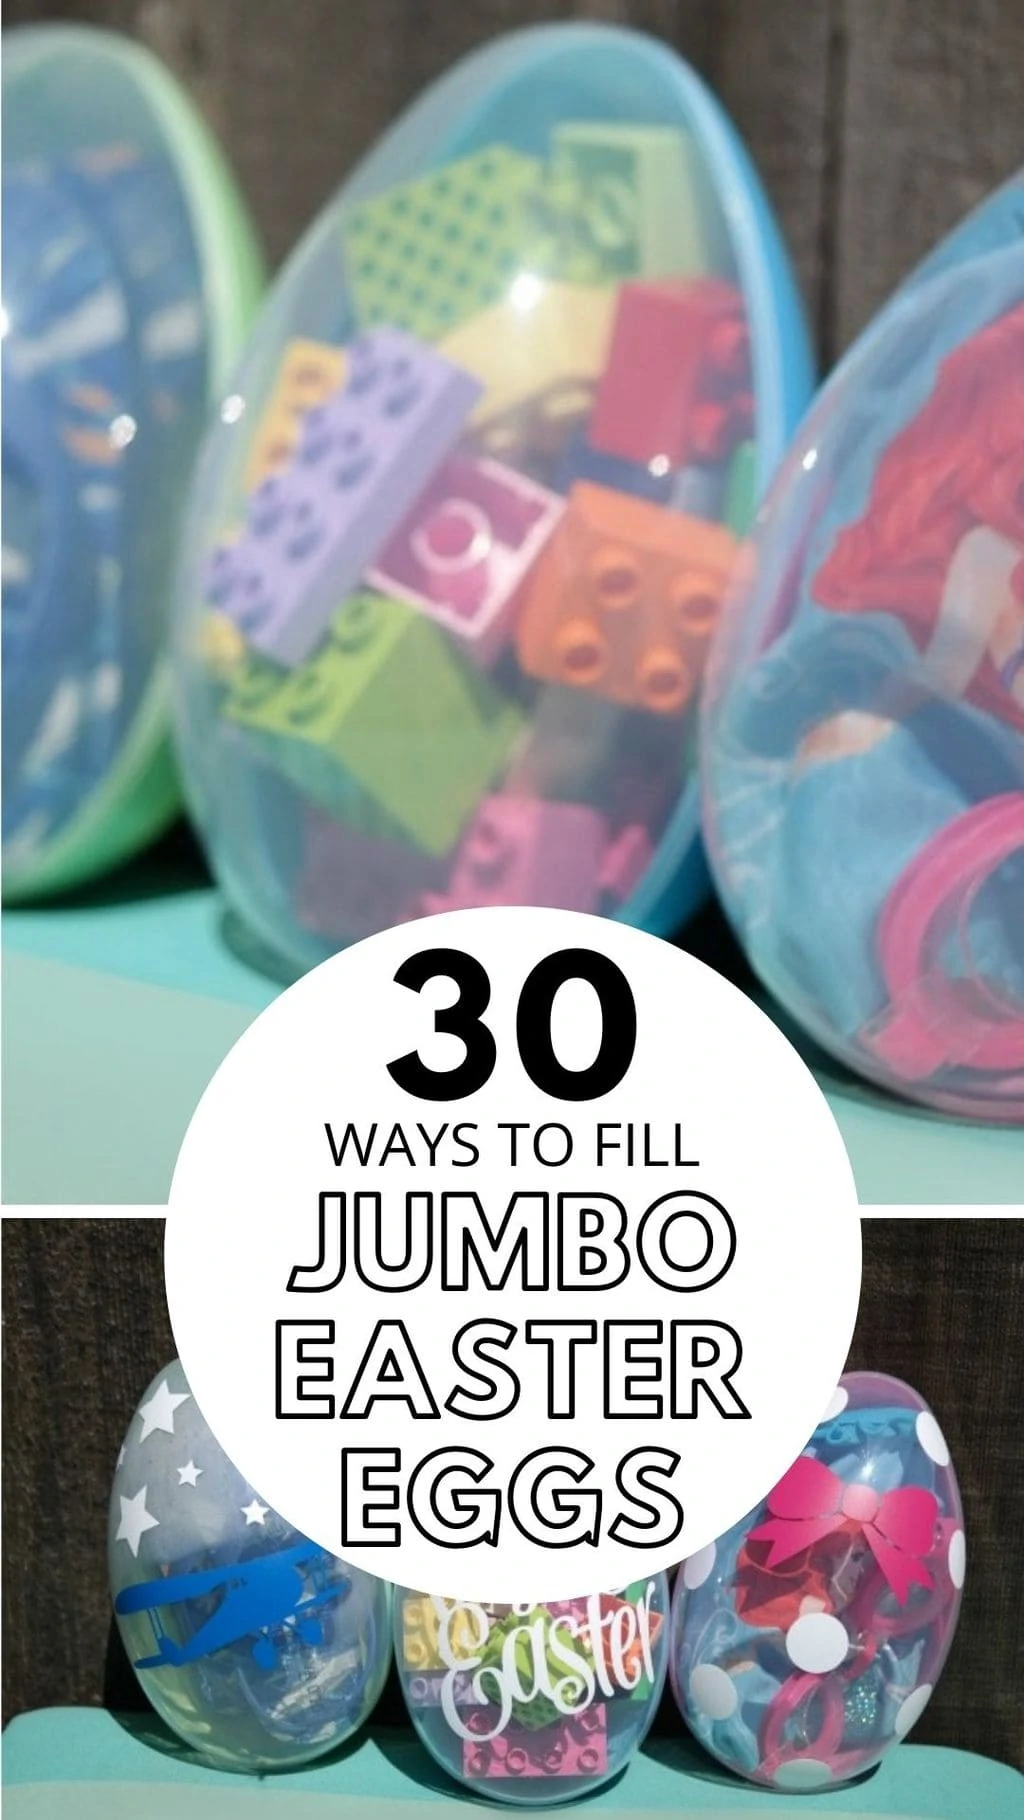 30 ways to fill jumbo easter eggs